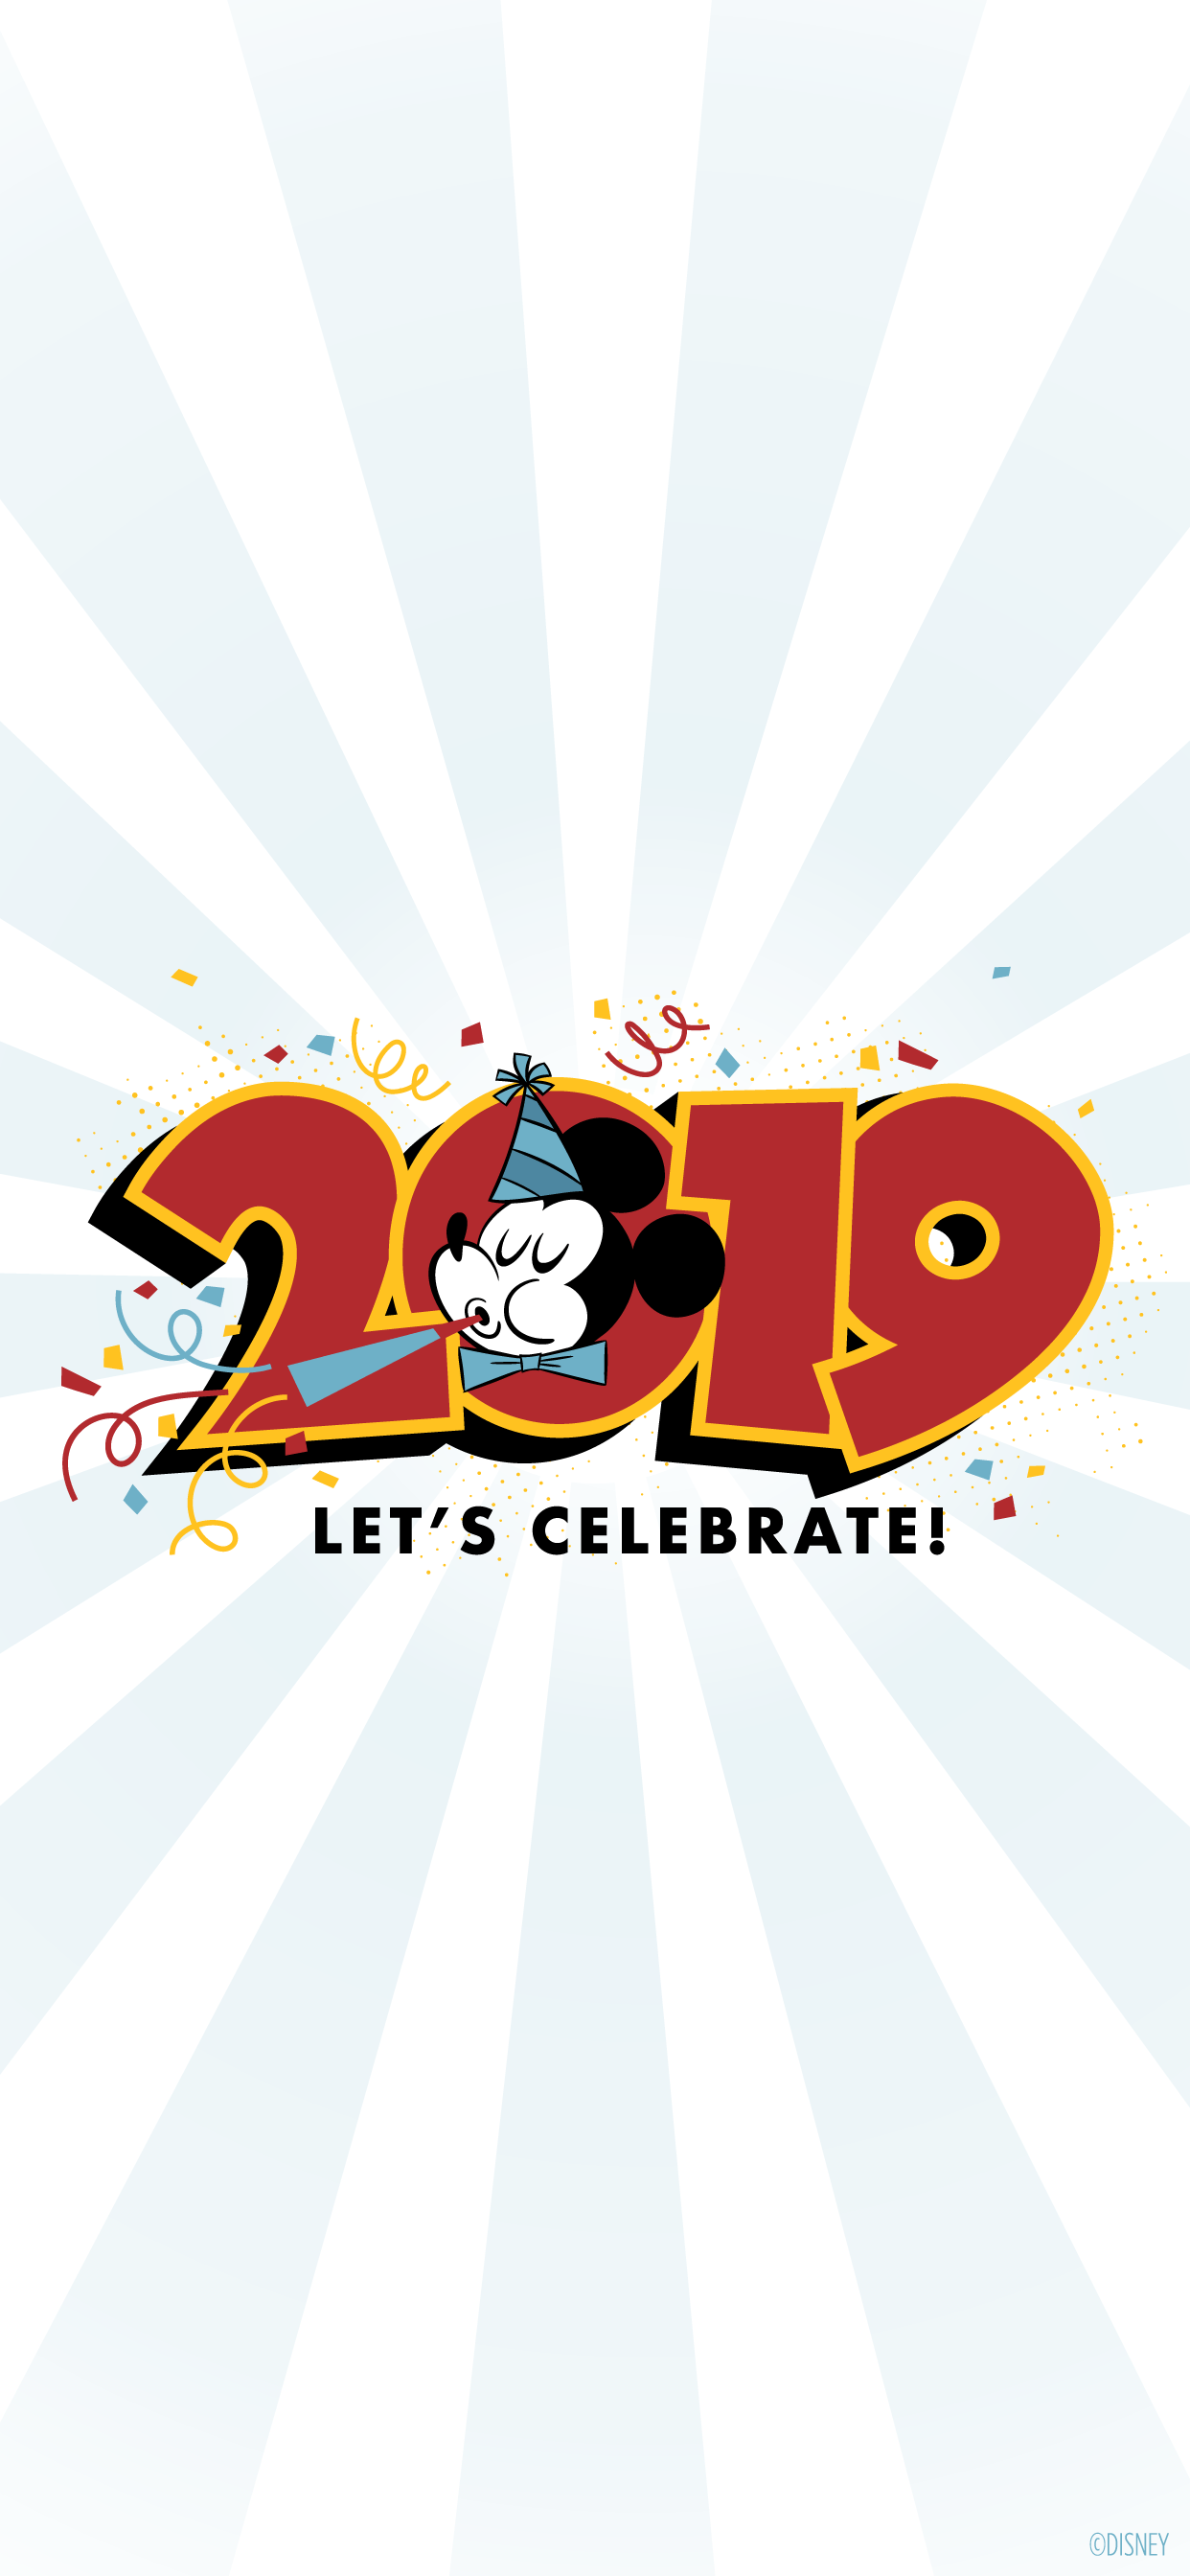 Feliz año nuevo 2019 Mickey Mouse Wallpaper - iPhone / Android / Watch